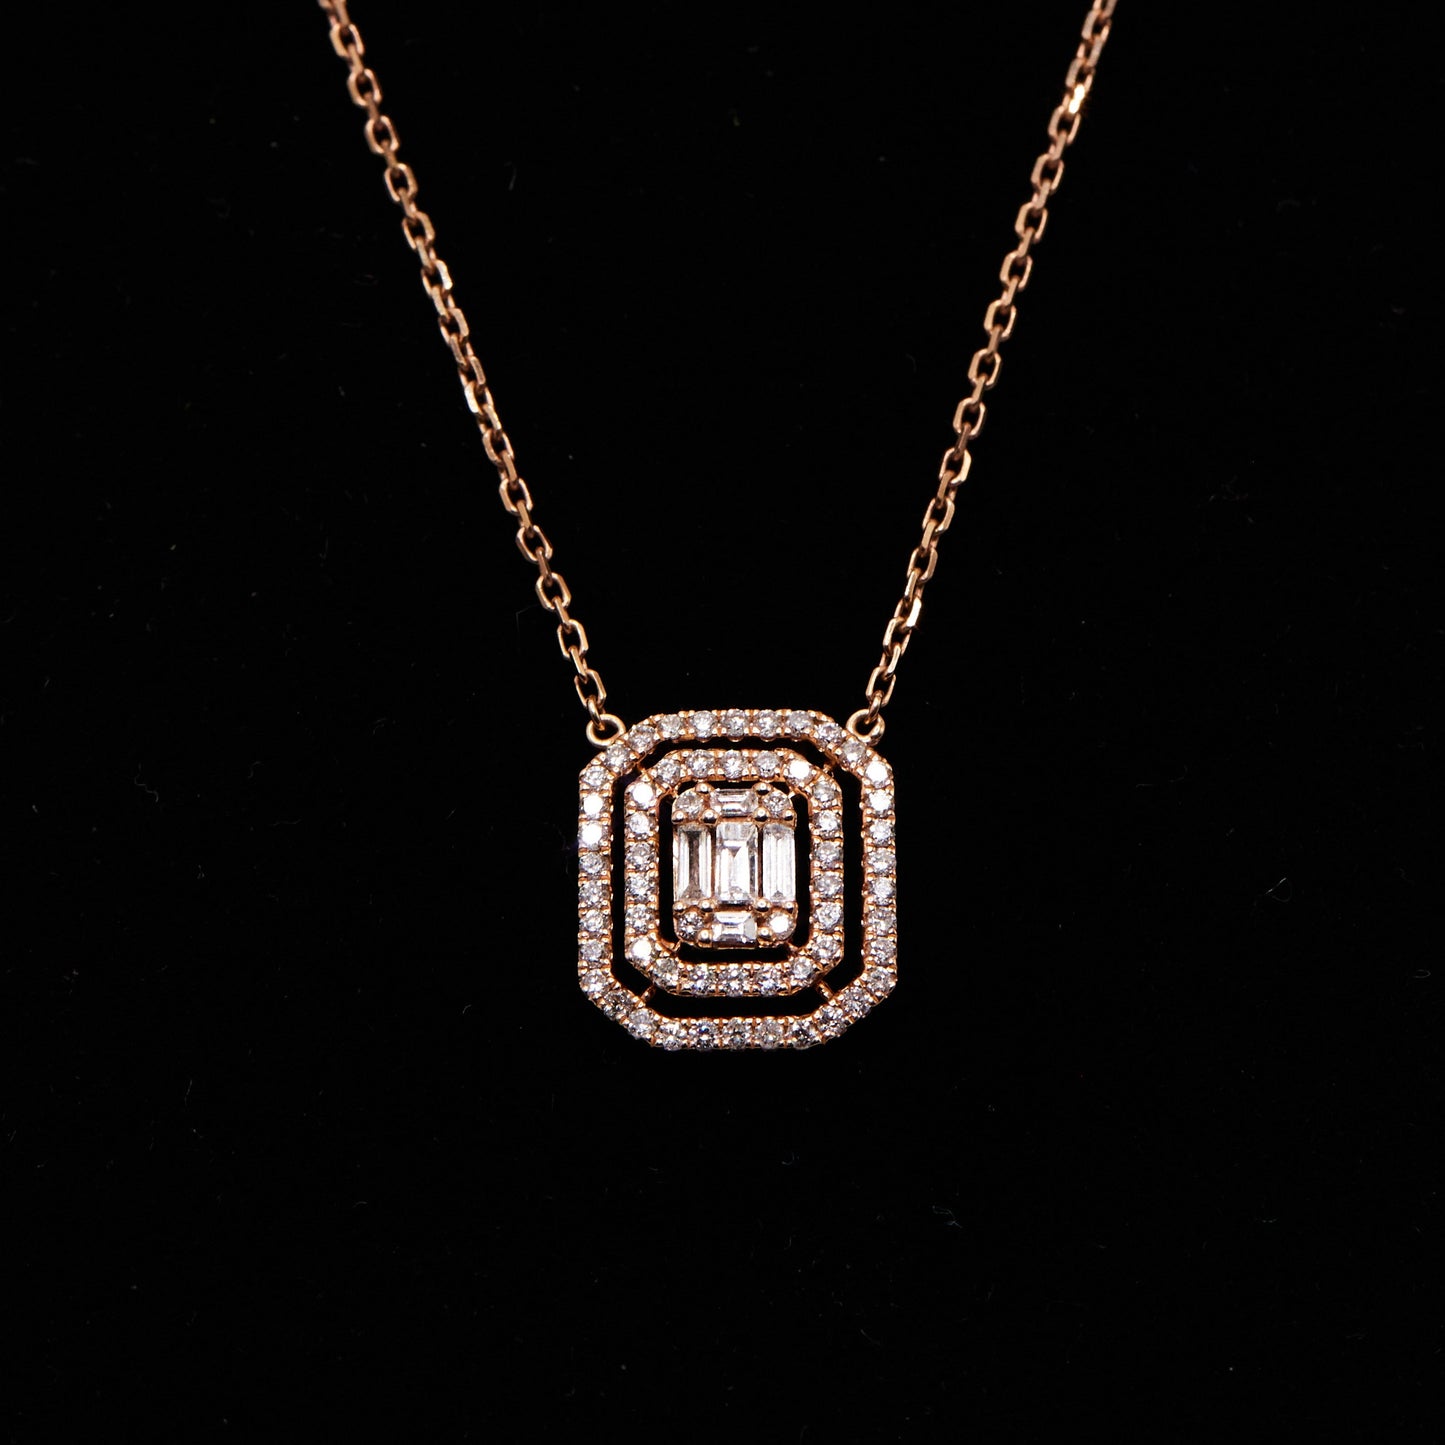 double halo diamond necklace on black background